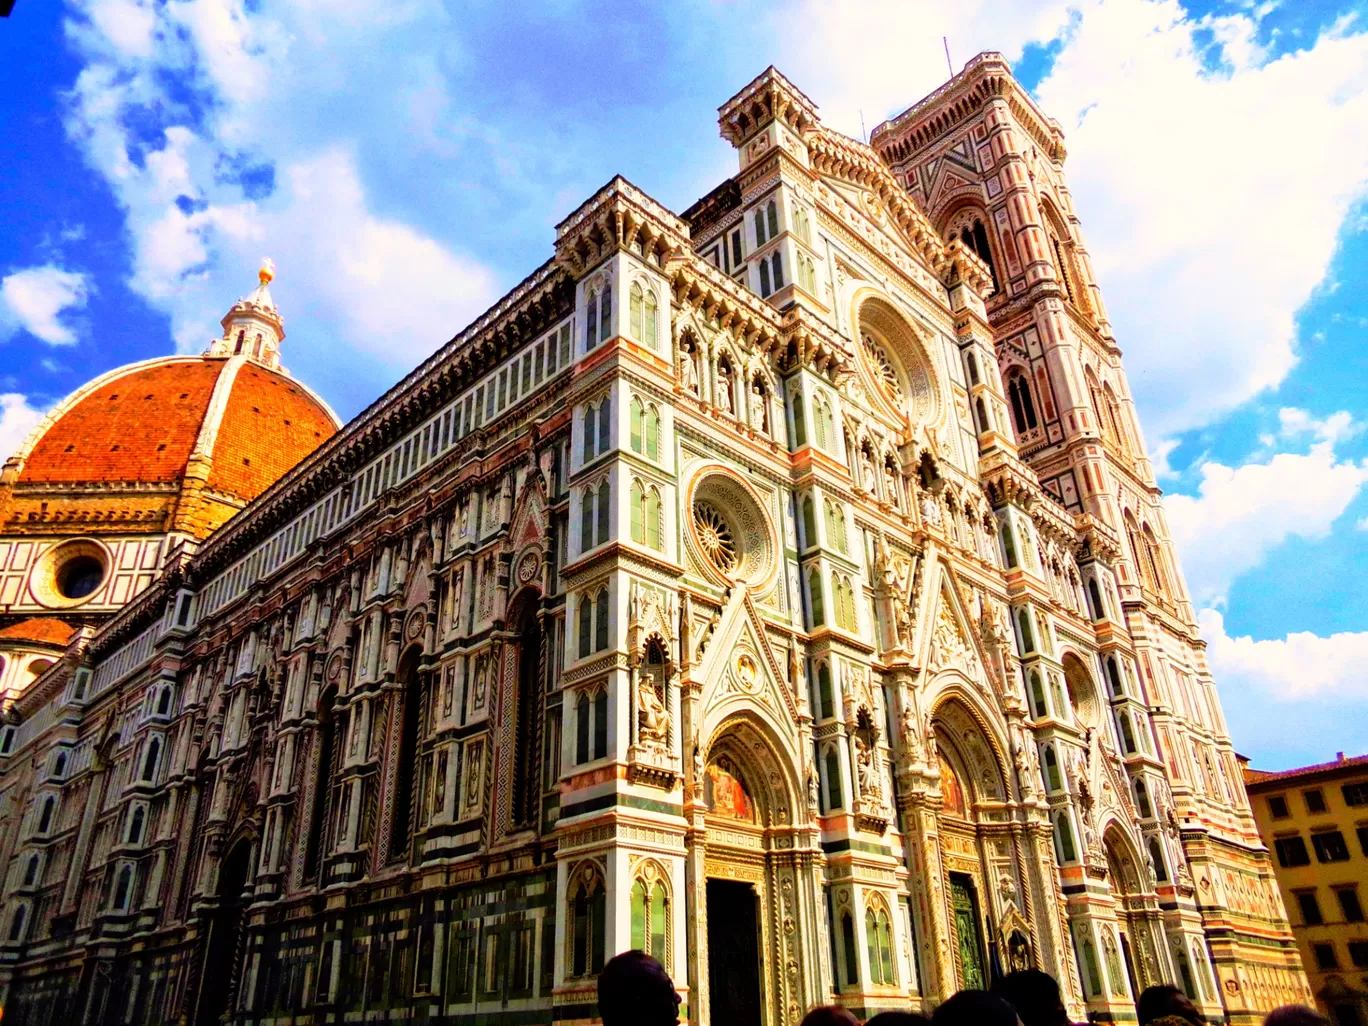 Photo of Florence By Mazzanilife